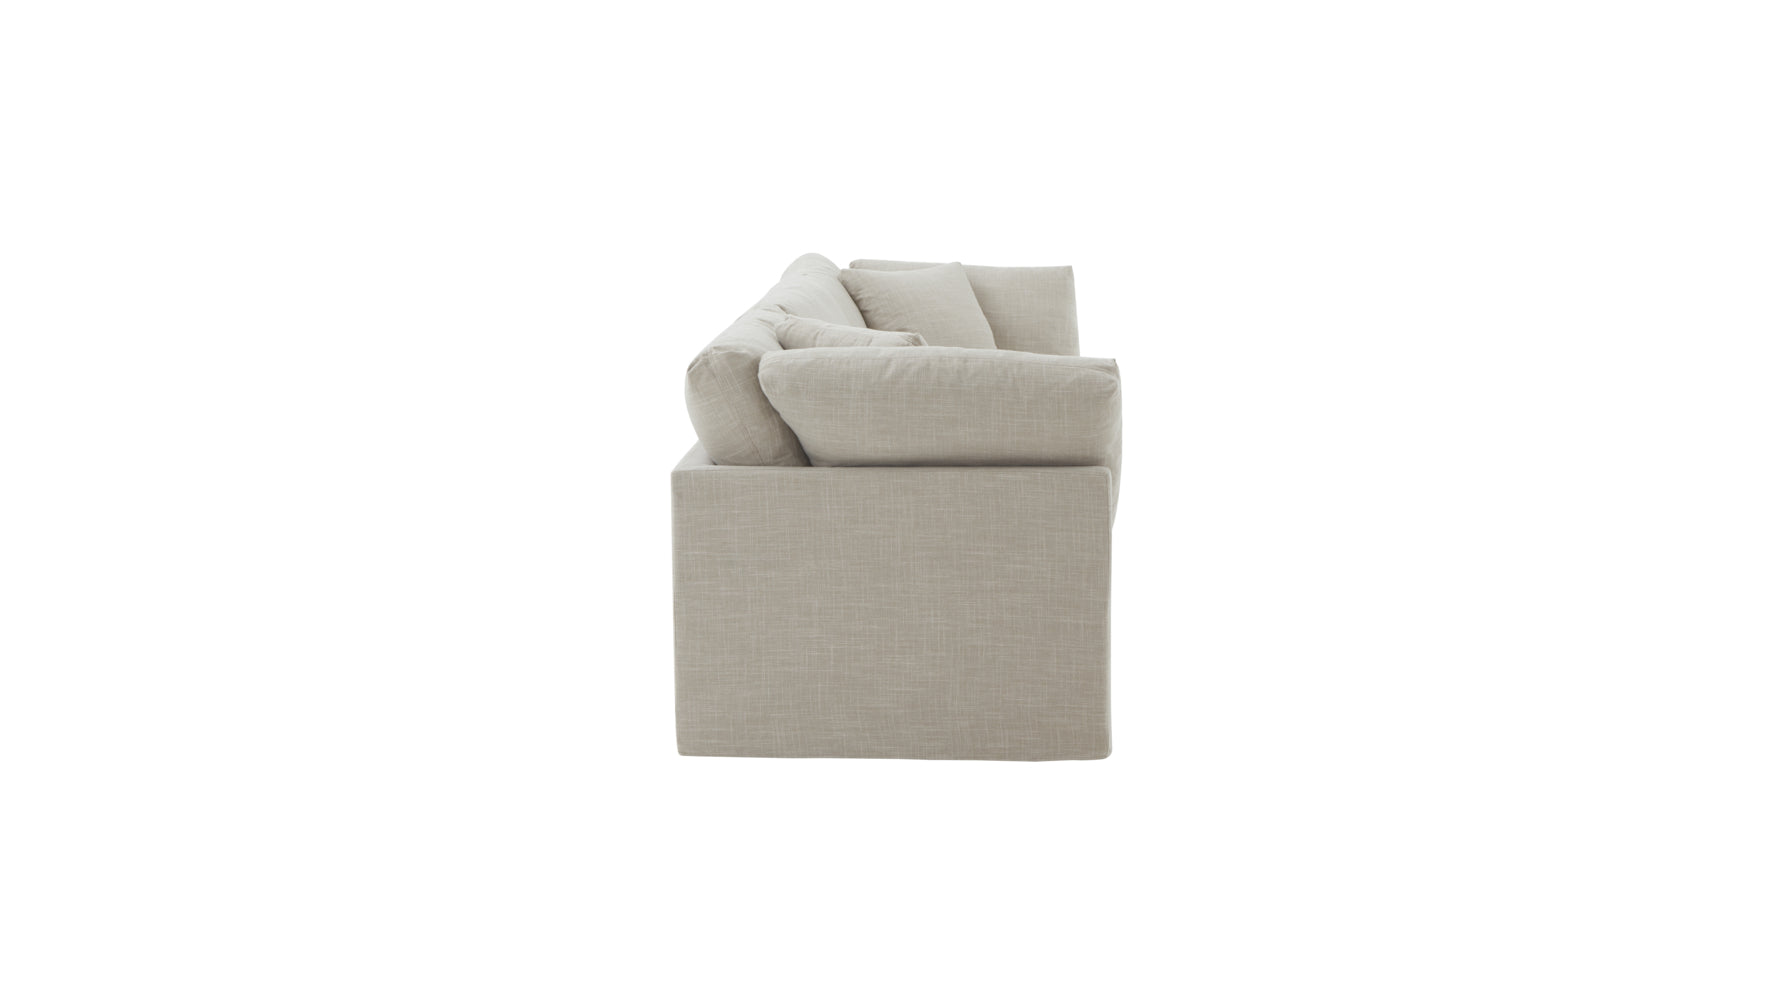 Get Together™ 3-Piece Modular Sofa, Standard, Light Pebble - Image 6